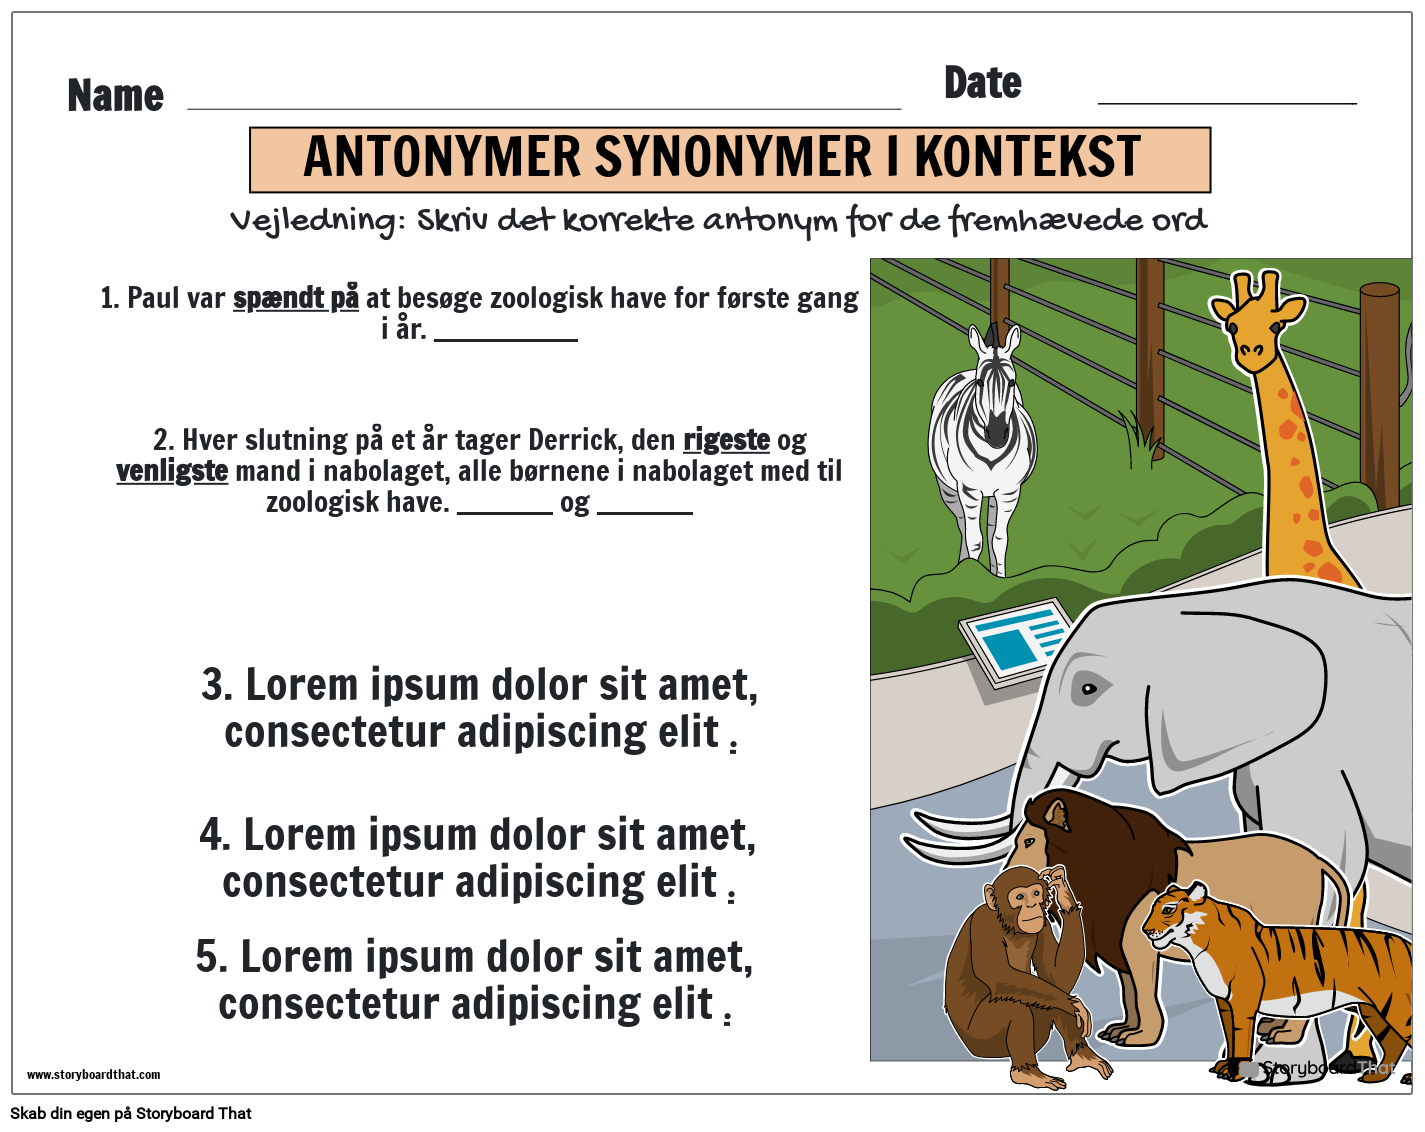 Antonymer og synonymer i kontekst regneark